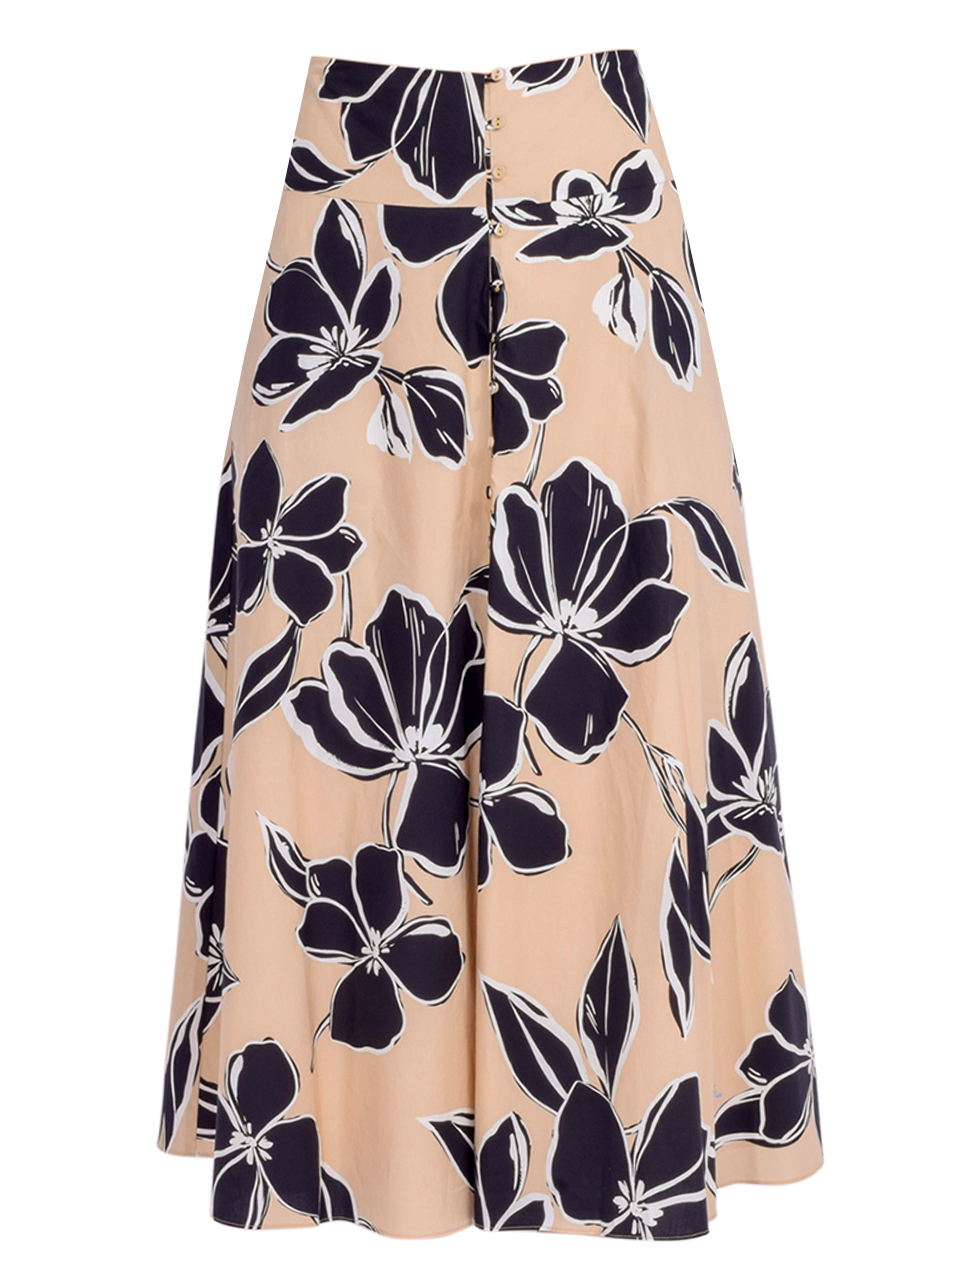 GILNER FARRAR Valentina Skirt in Khaki Floral Product Shot